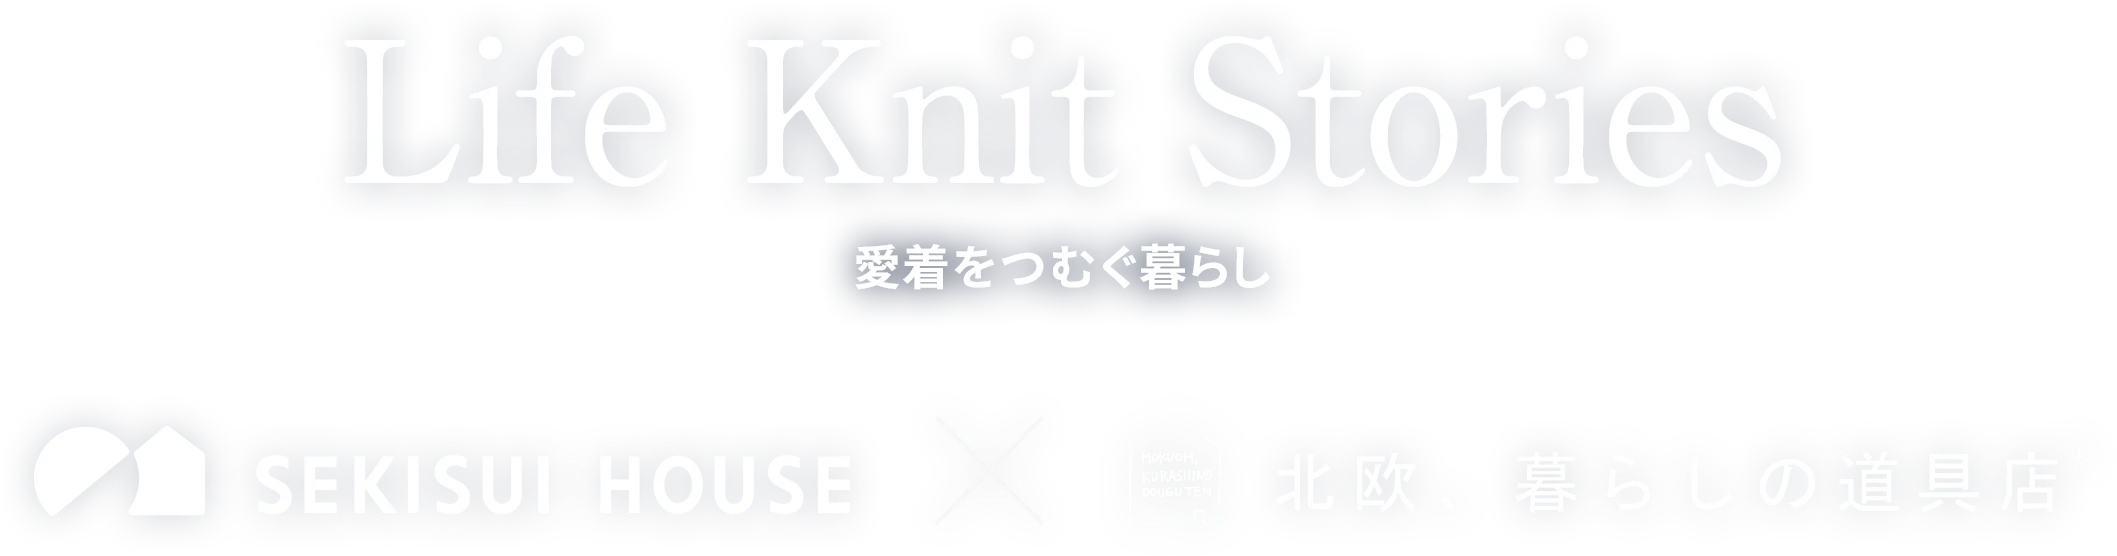 Life Knit Stories 愛着をつむぐ暮らし 積水ハウス×北欧、暮らしの道具店